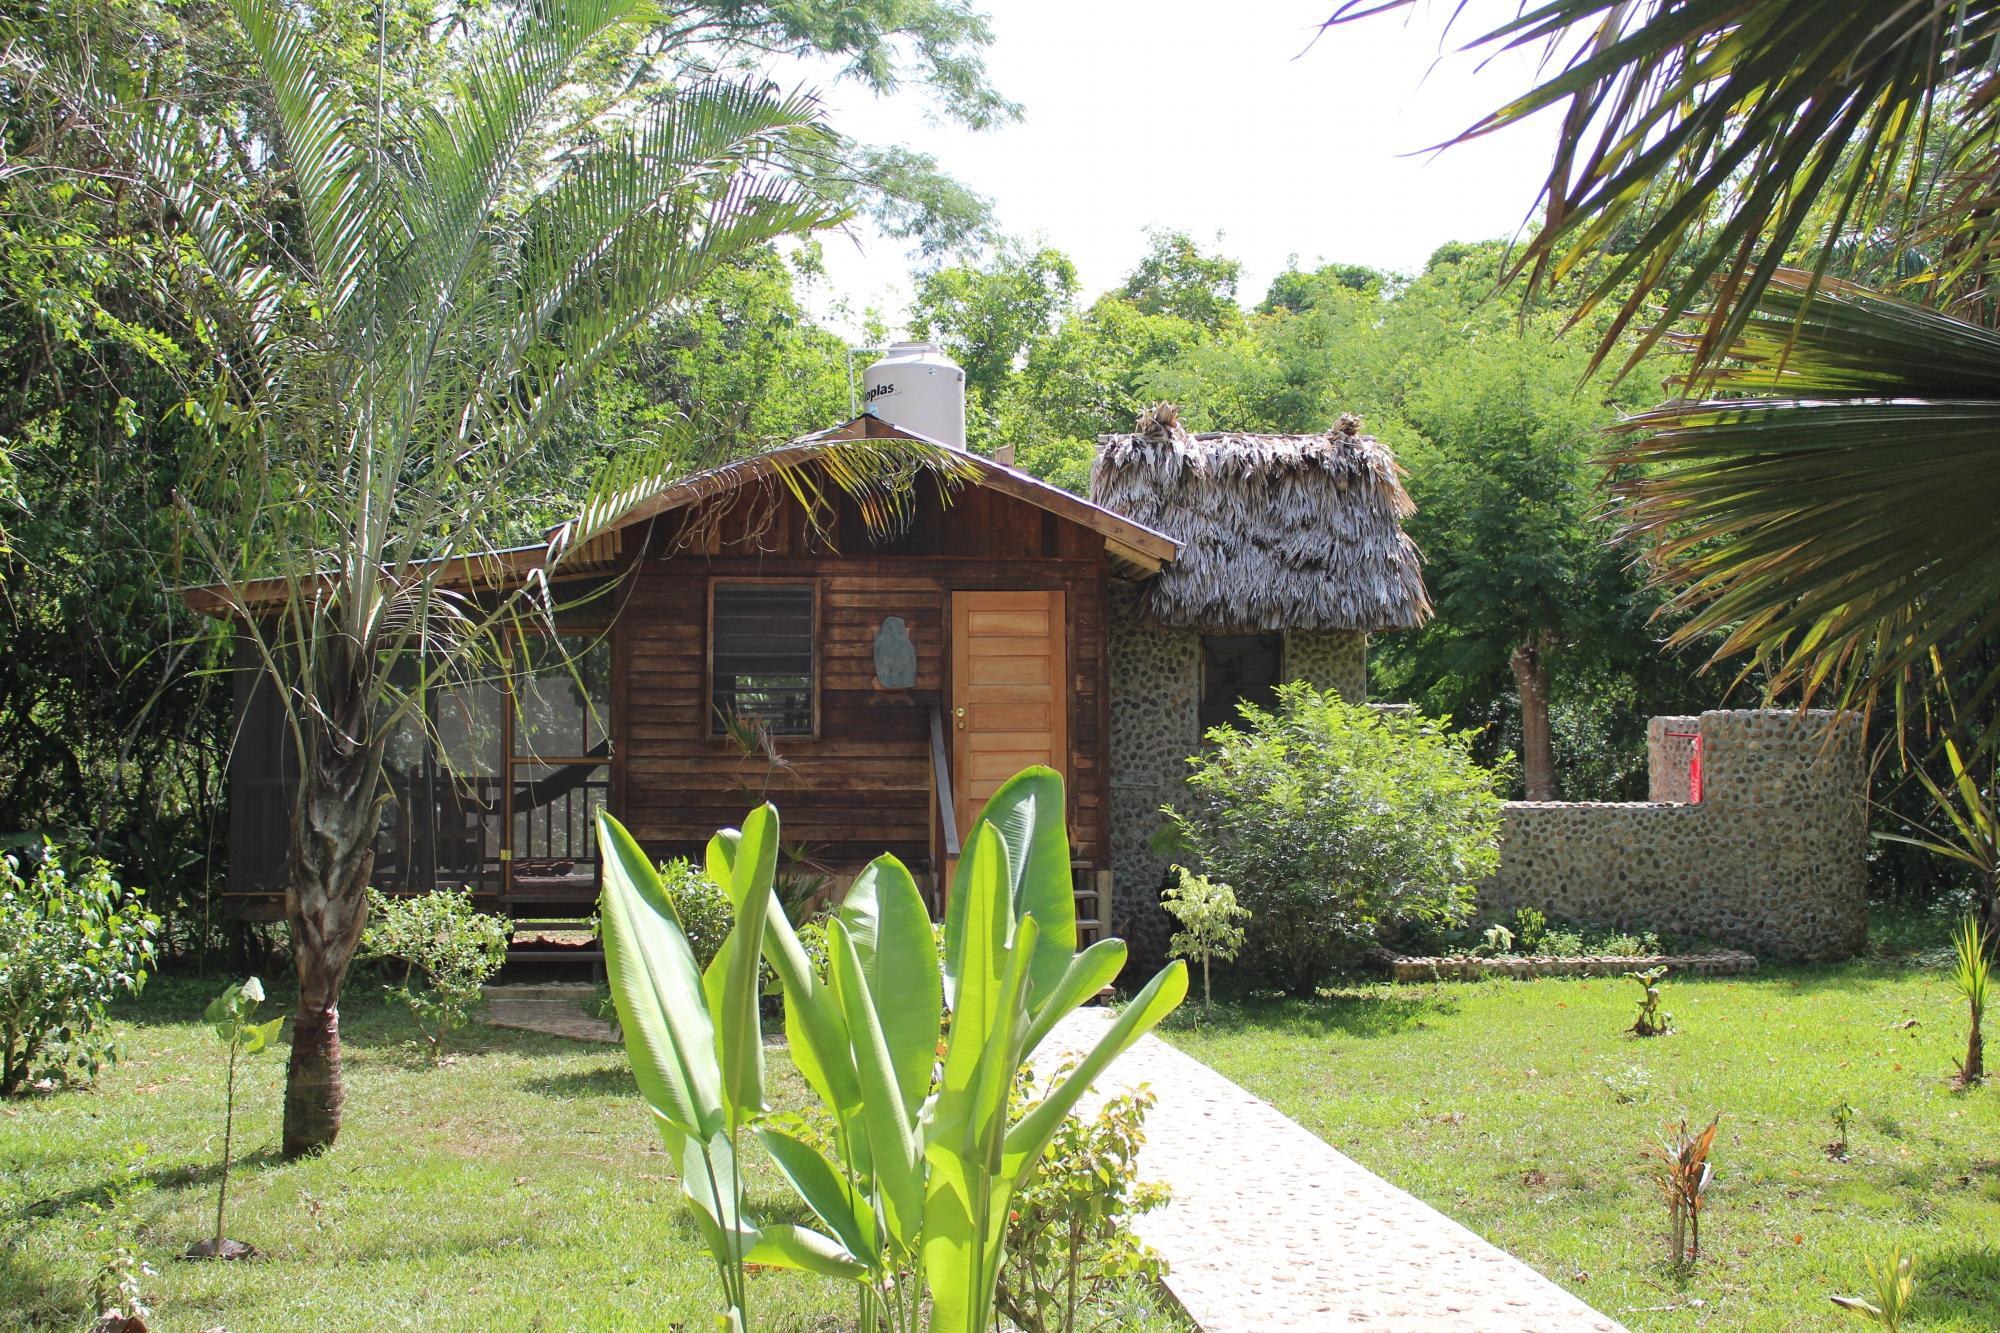 Macaw Bank Jungle Lodge, Cristo Rey, Belize